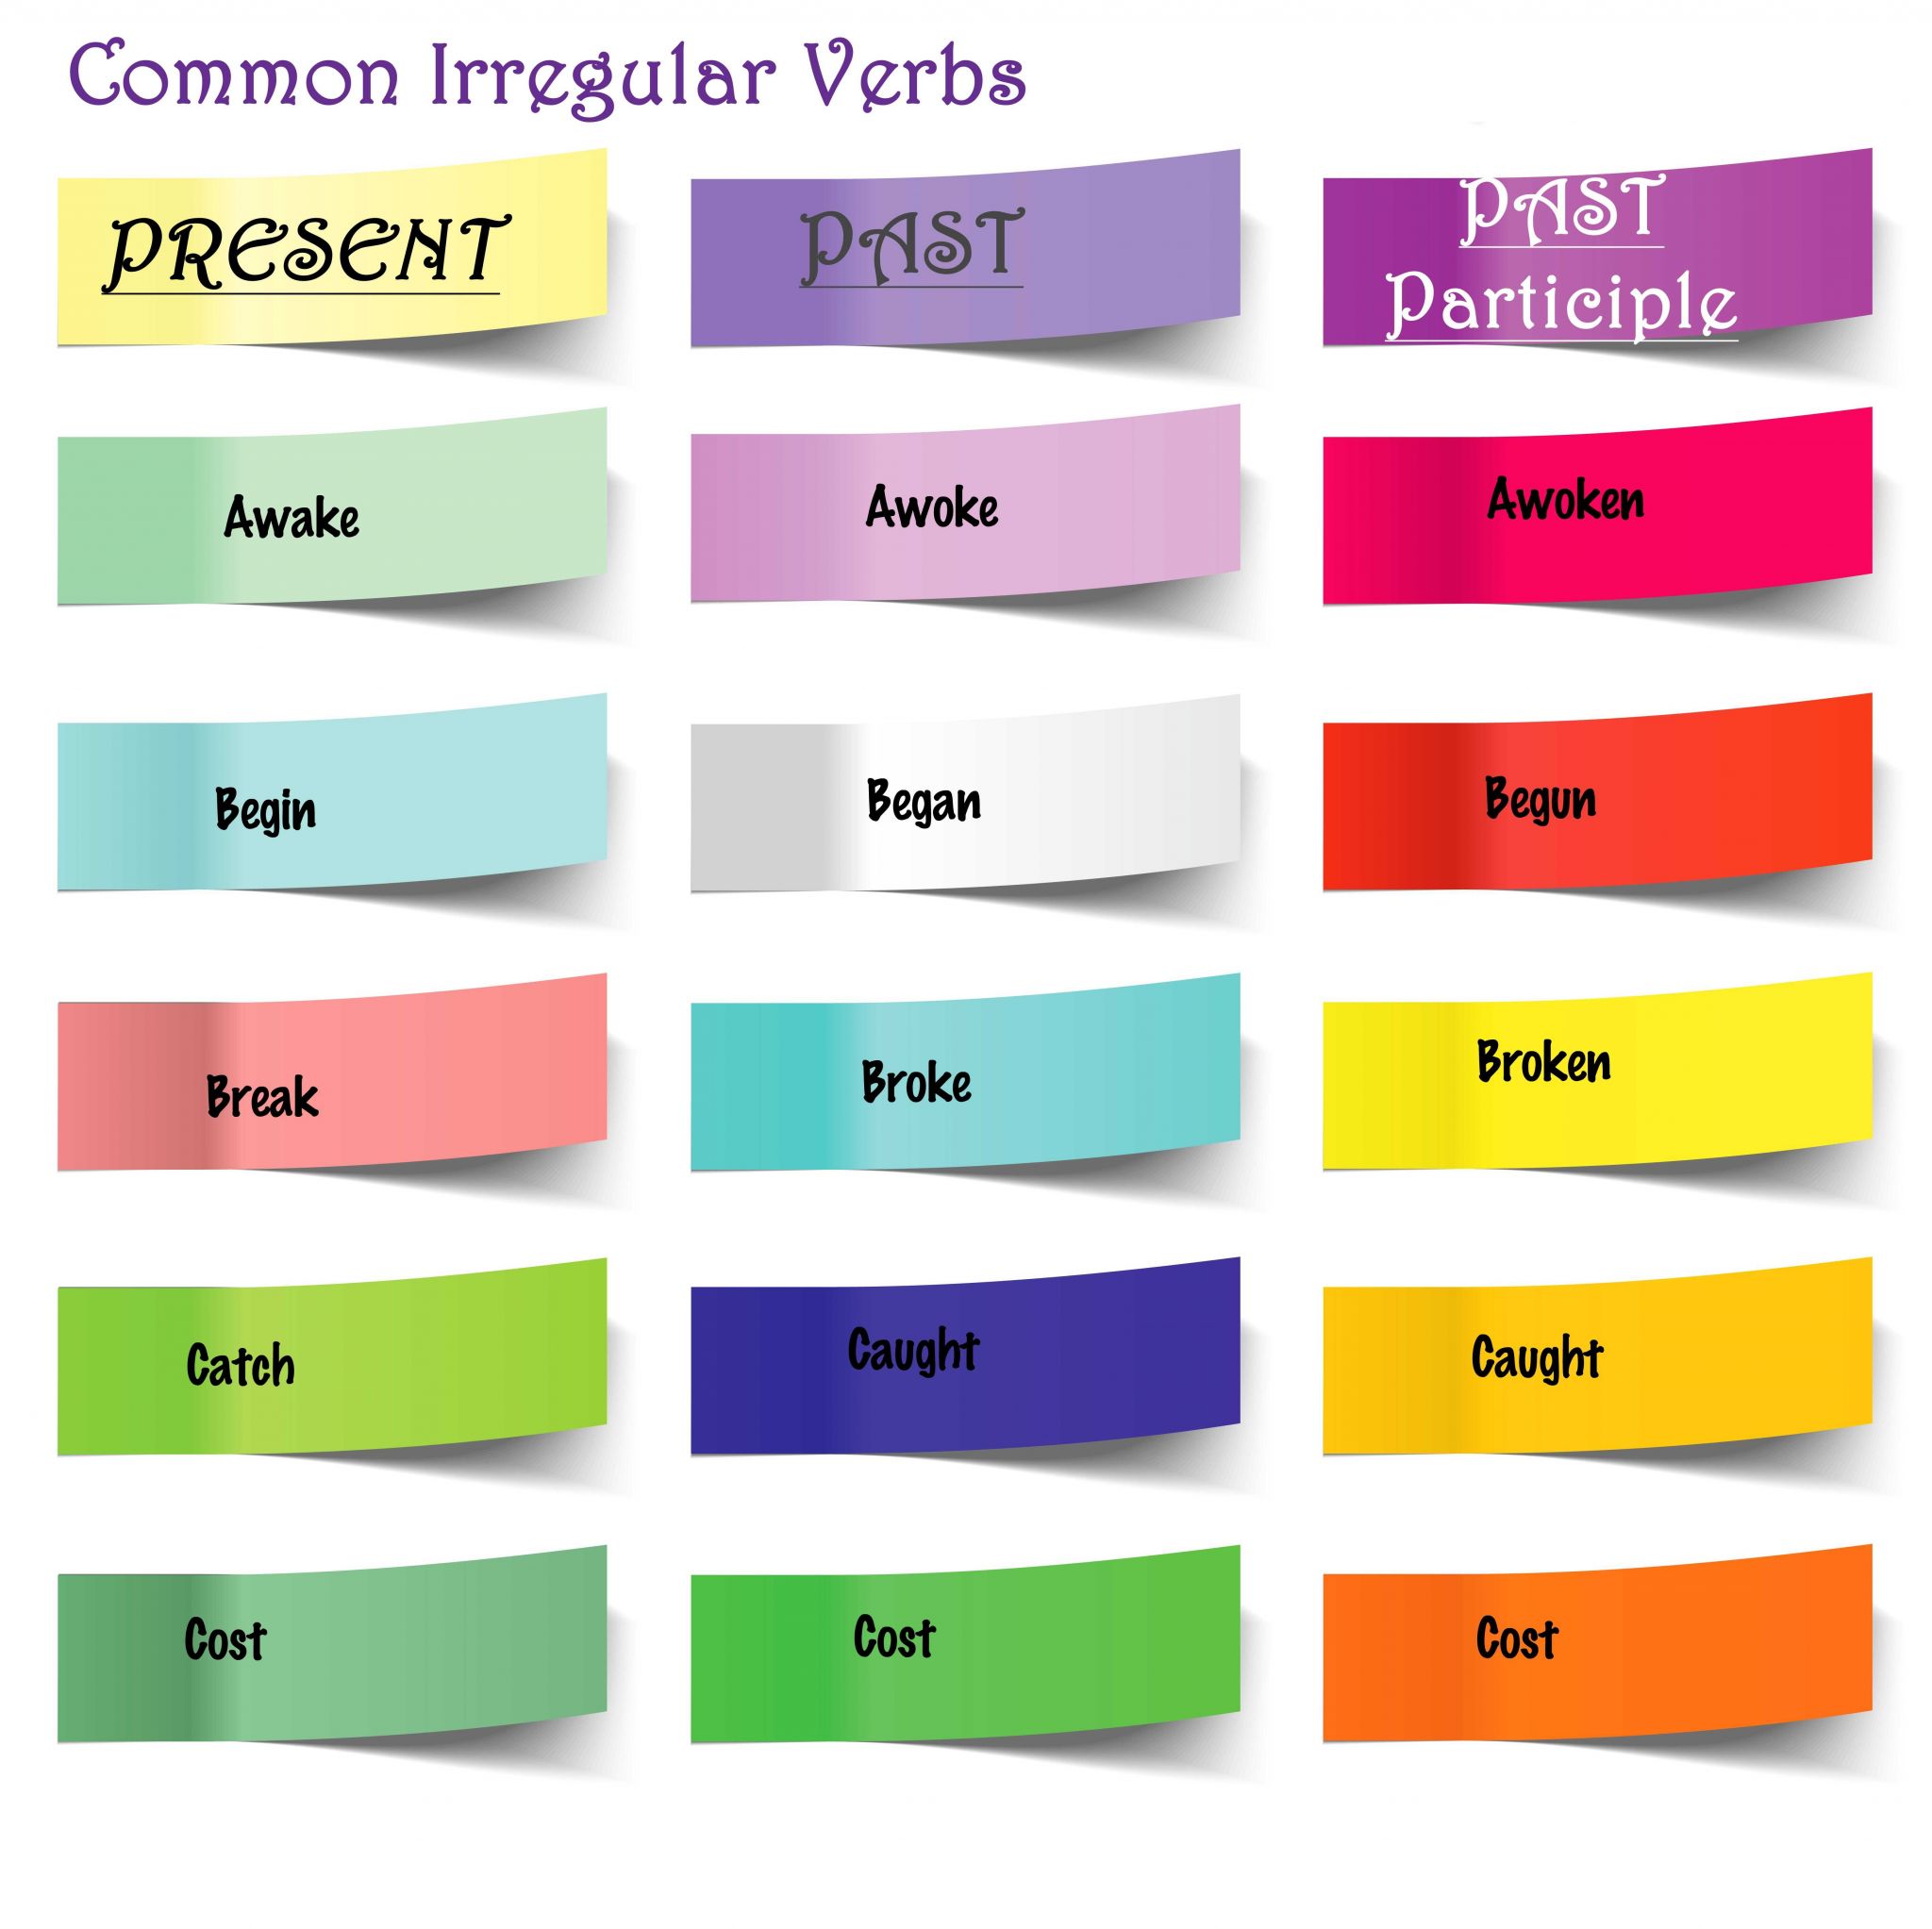 Regular Irregular Verbs Worksheet with Irregular Verbs